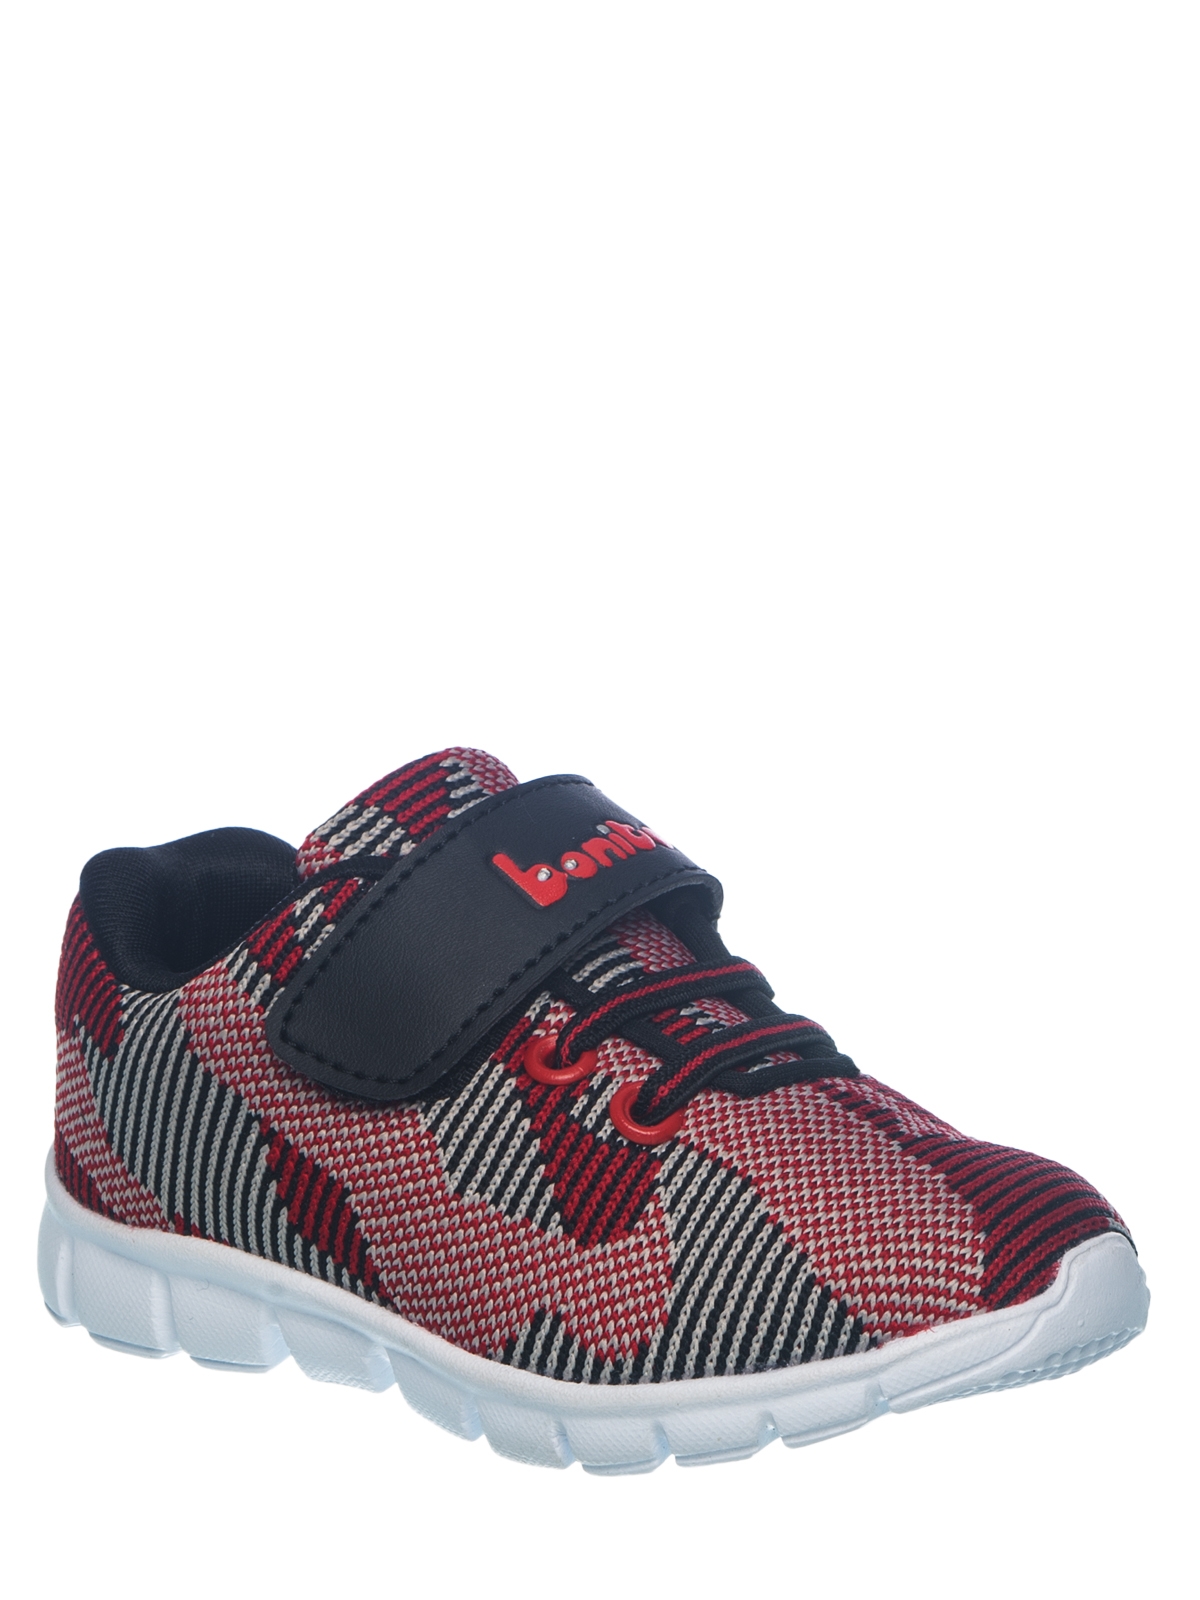 Khadim | Bonito Red Casual Sneakers for Kids